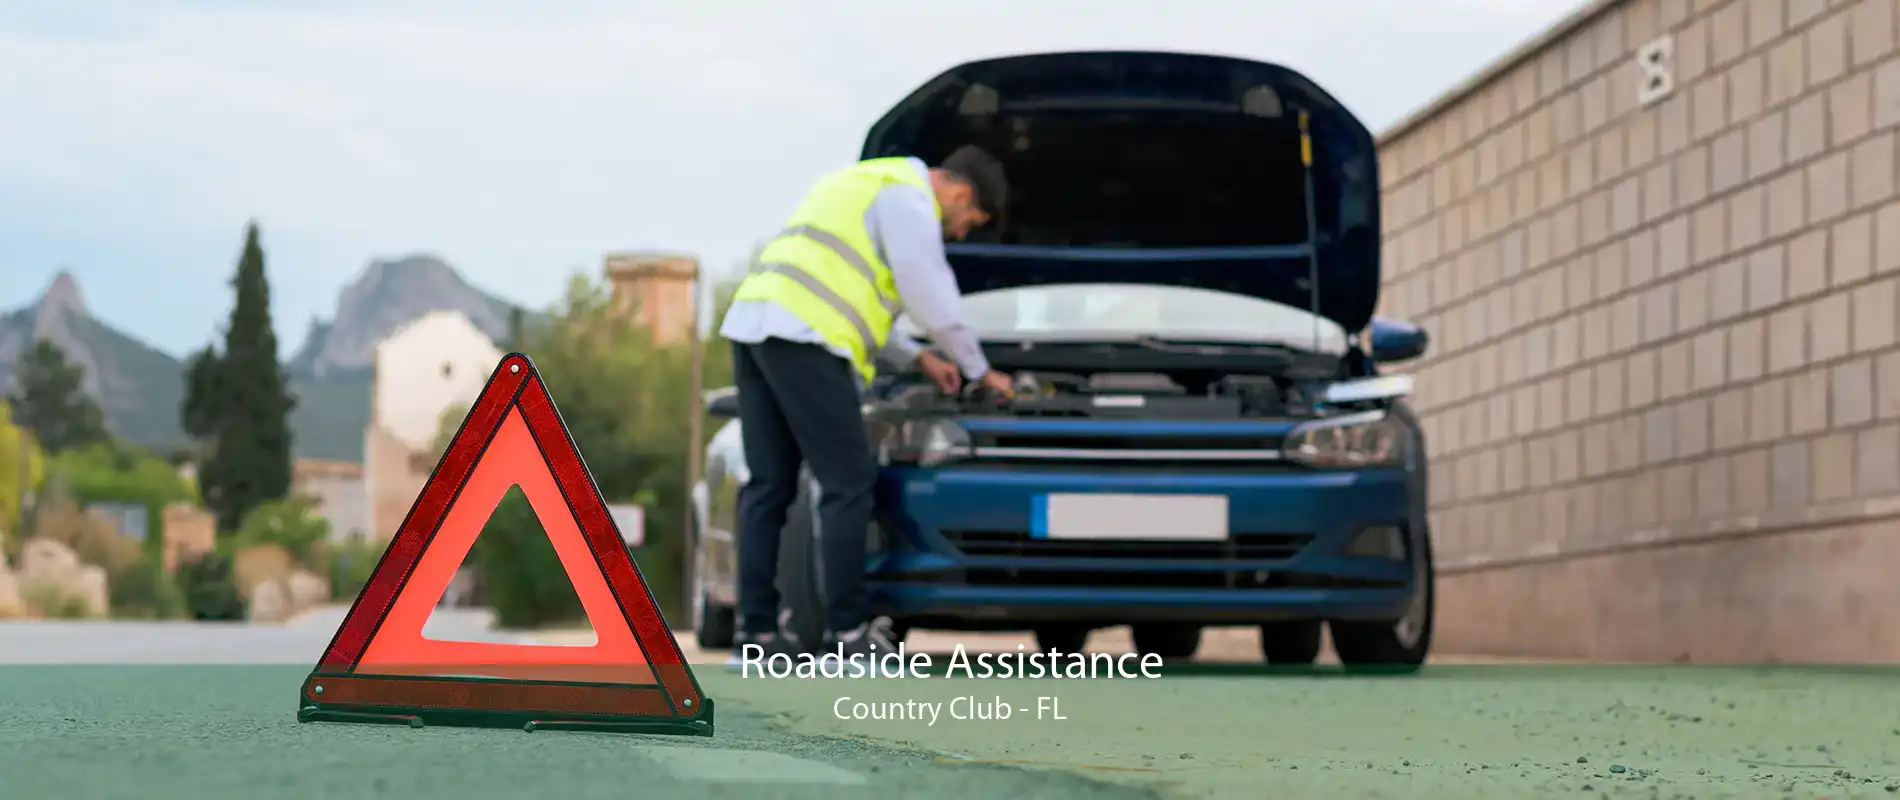 Roadside Assistance Country Club - FL